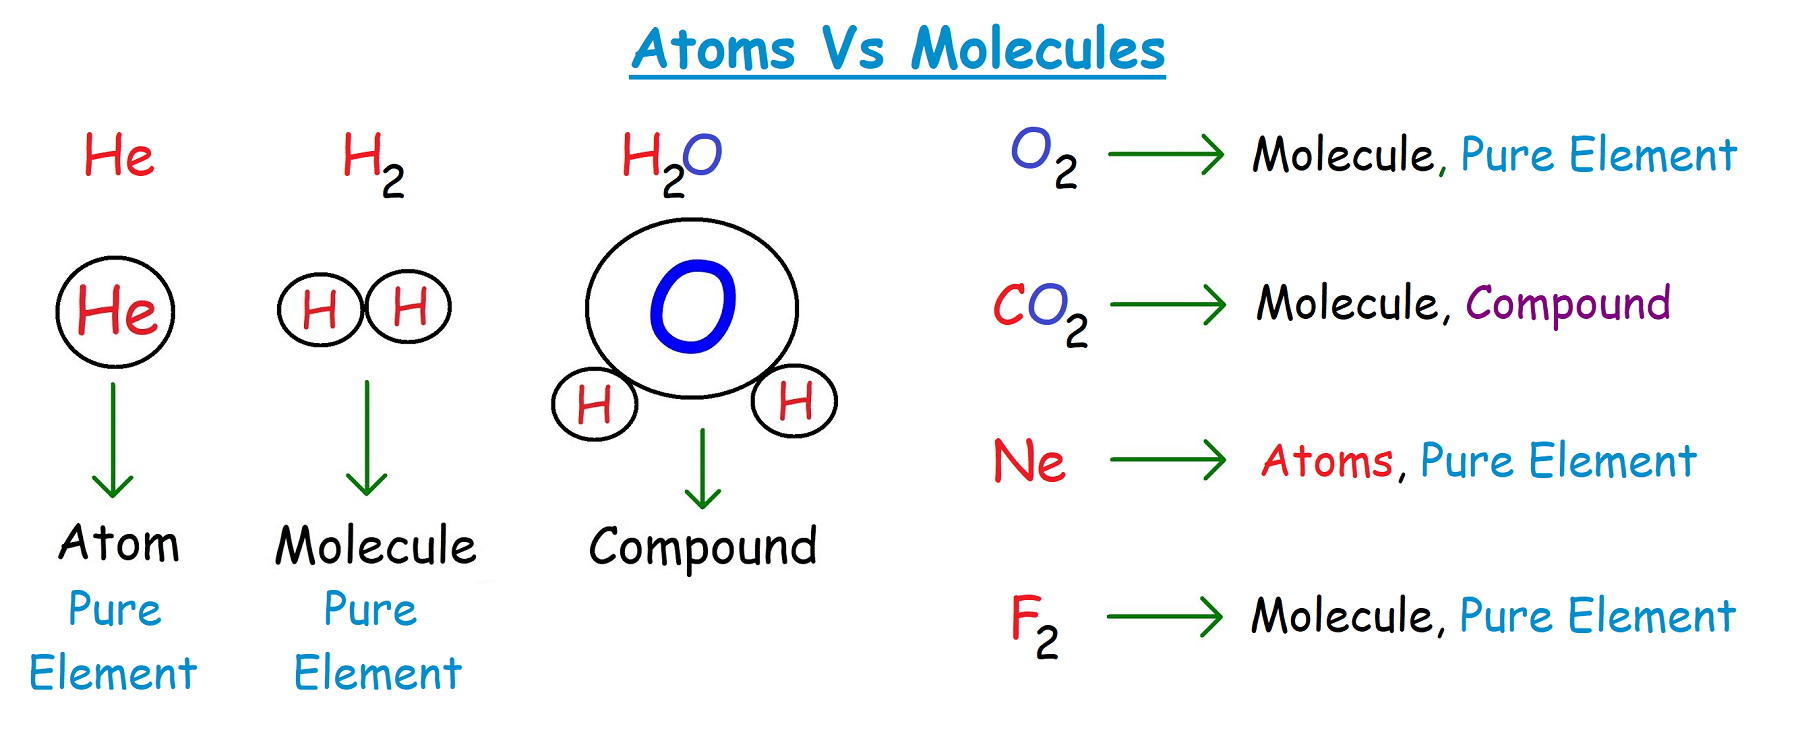 atoms molecules and compounds